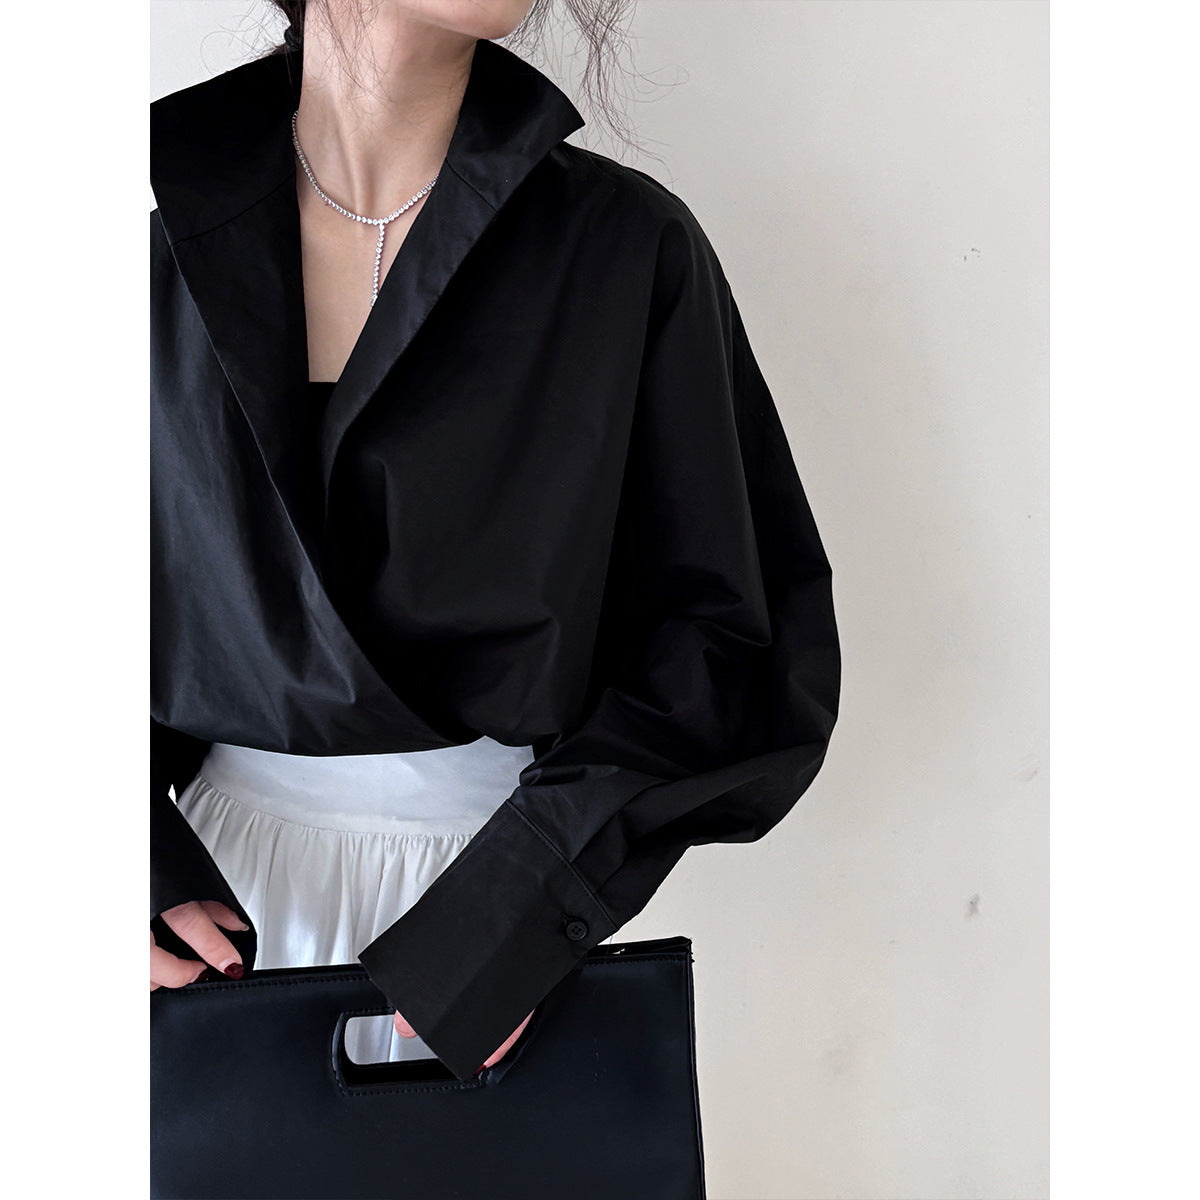 Profile Bandage Dress Stand Collar Deep V Plunge neck White Shirt Women Lazy Batwing Sleeve Elegant Large Version Blouse for Commuting